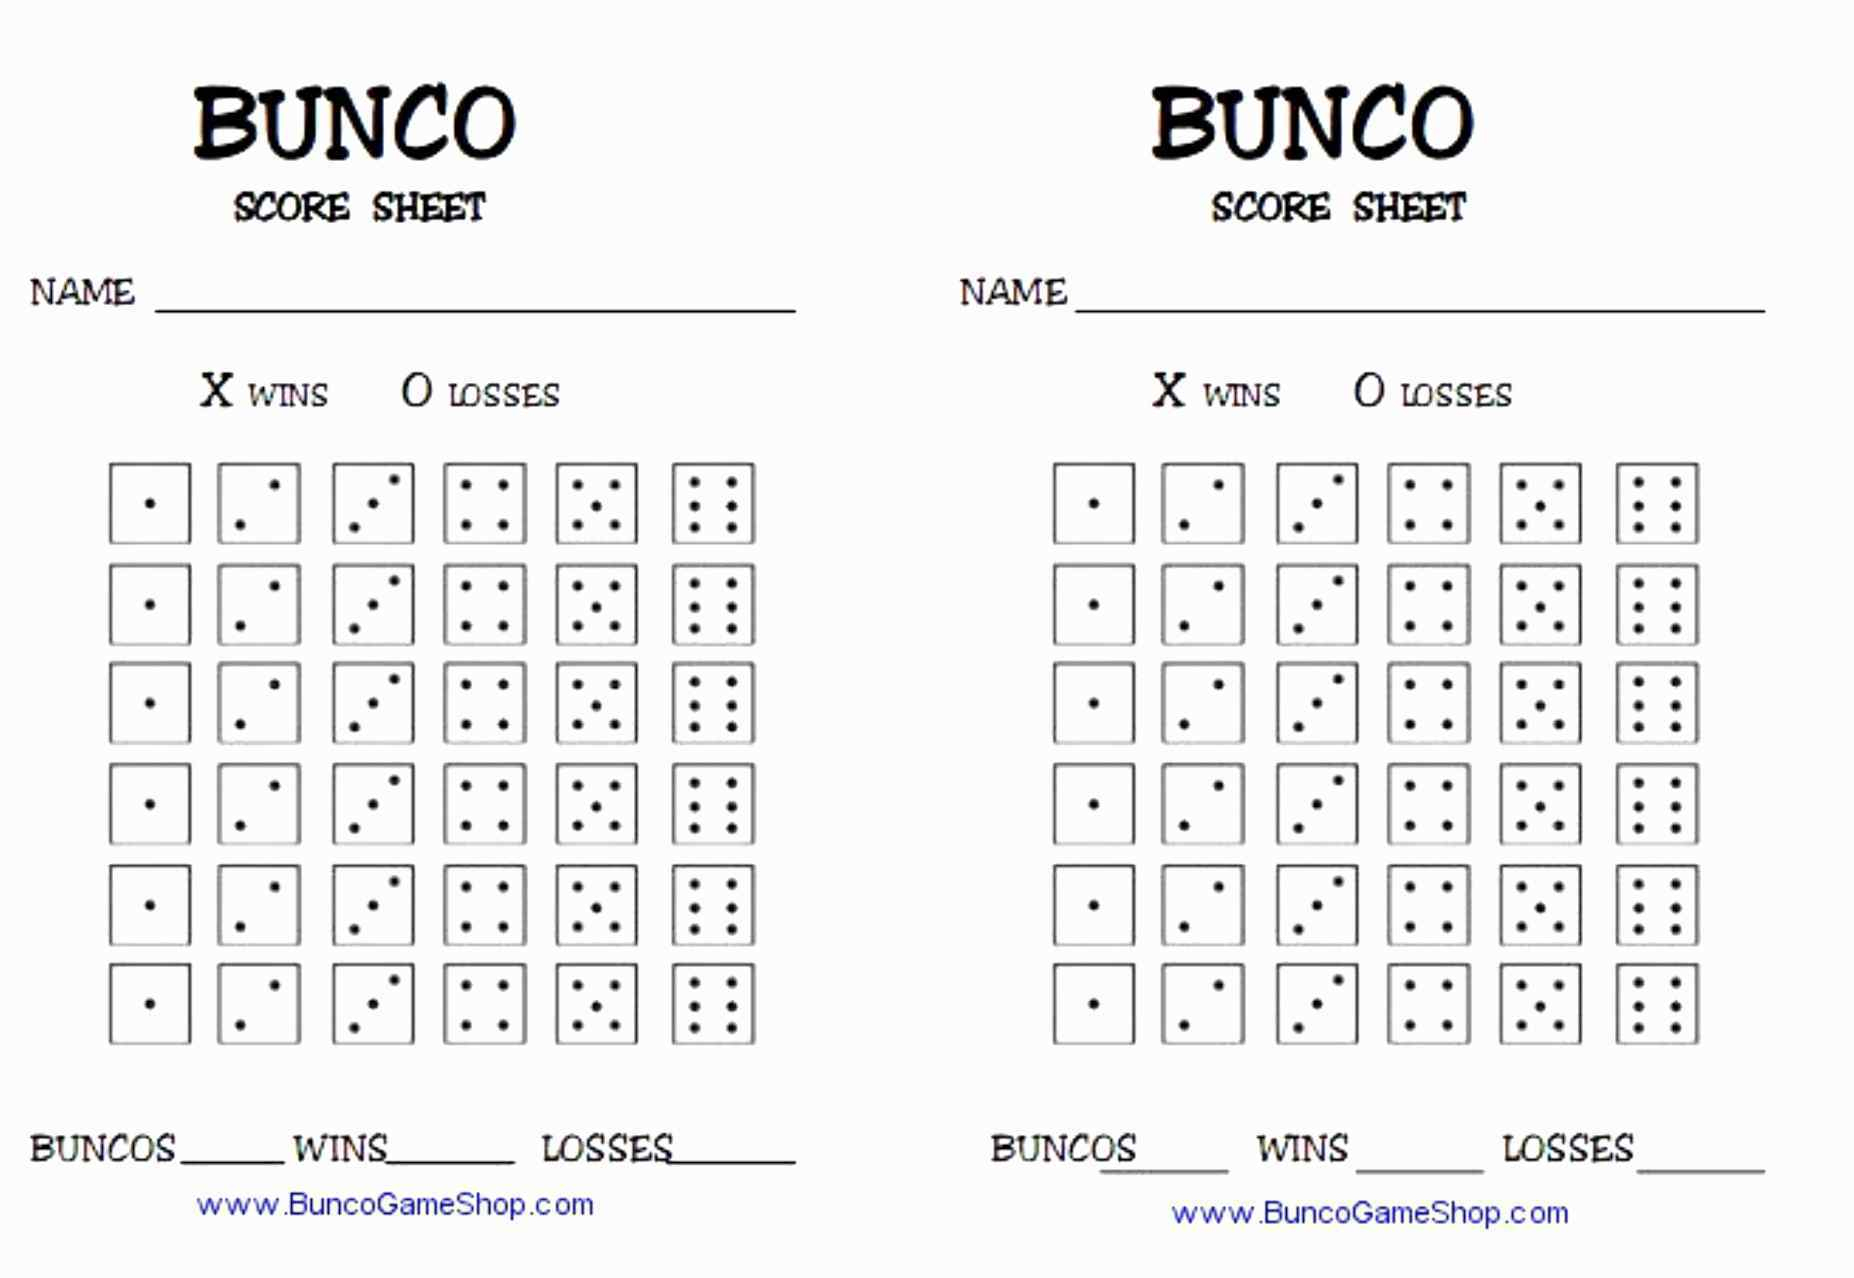 13 14 Printable Bunco Score Sheets 14Juillet2009 - Printable Bunco Score Ca...